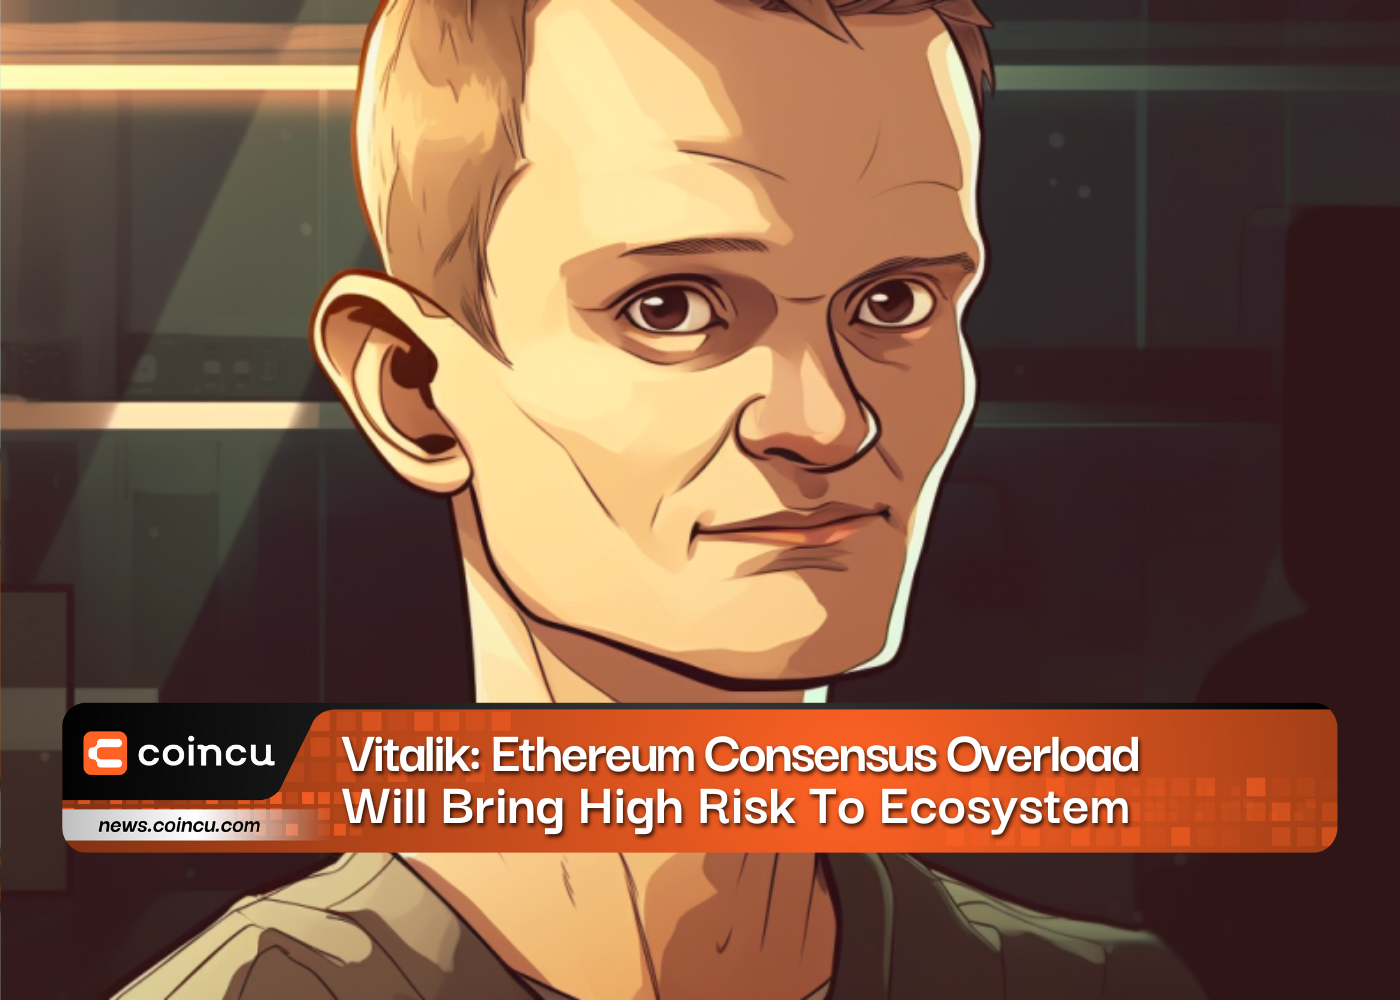 Vitalik: Ethereum Consensus Overload Will Bring High Risk To Ecosystem